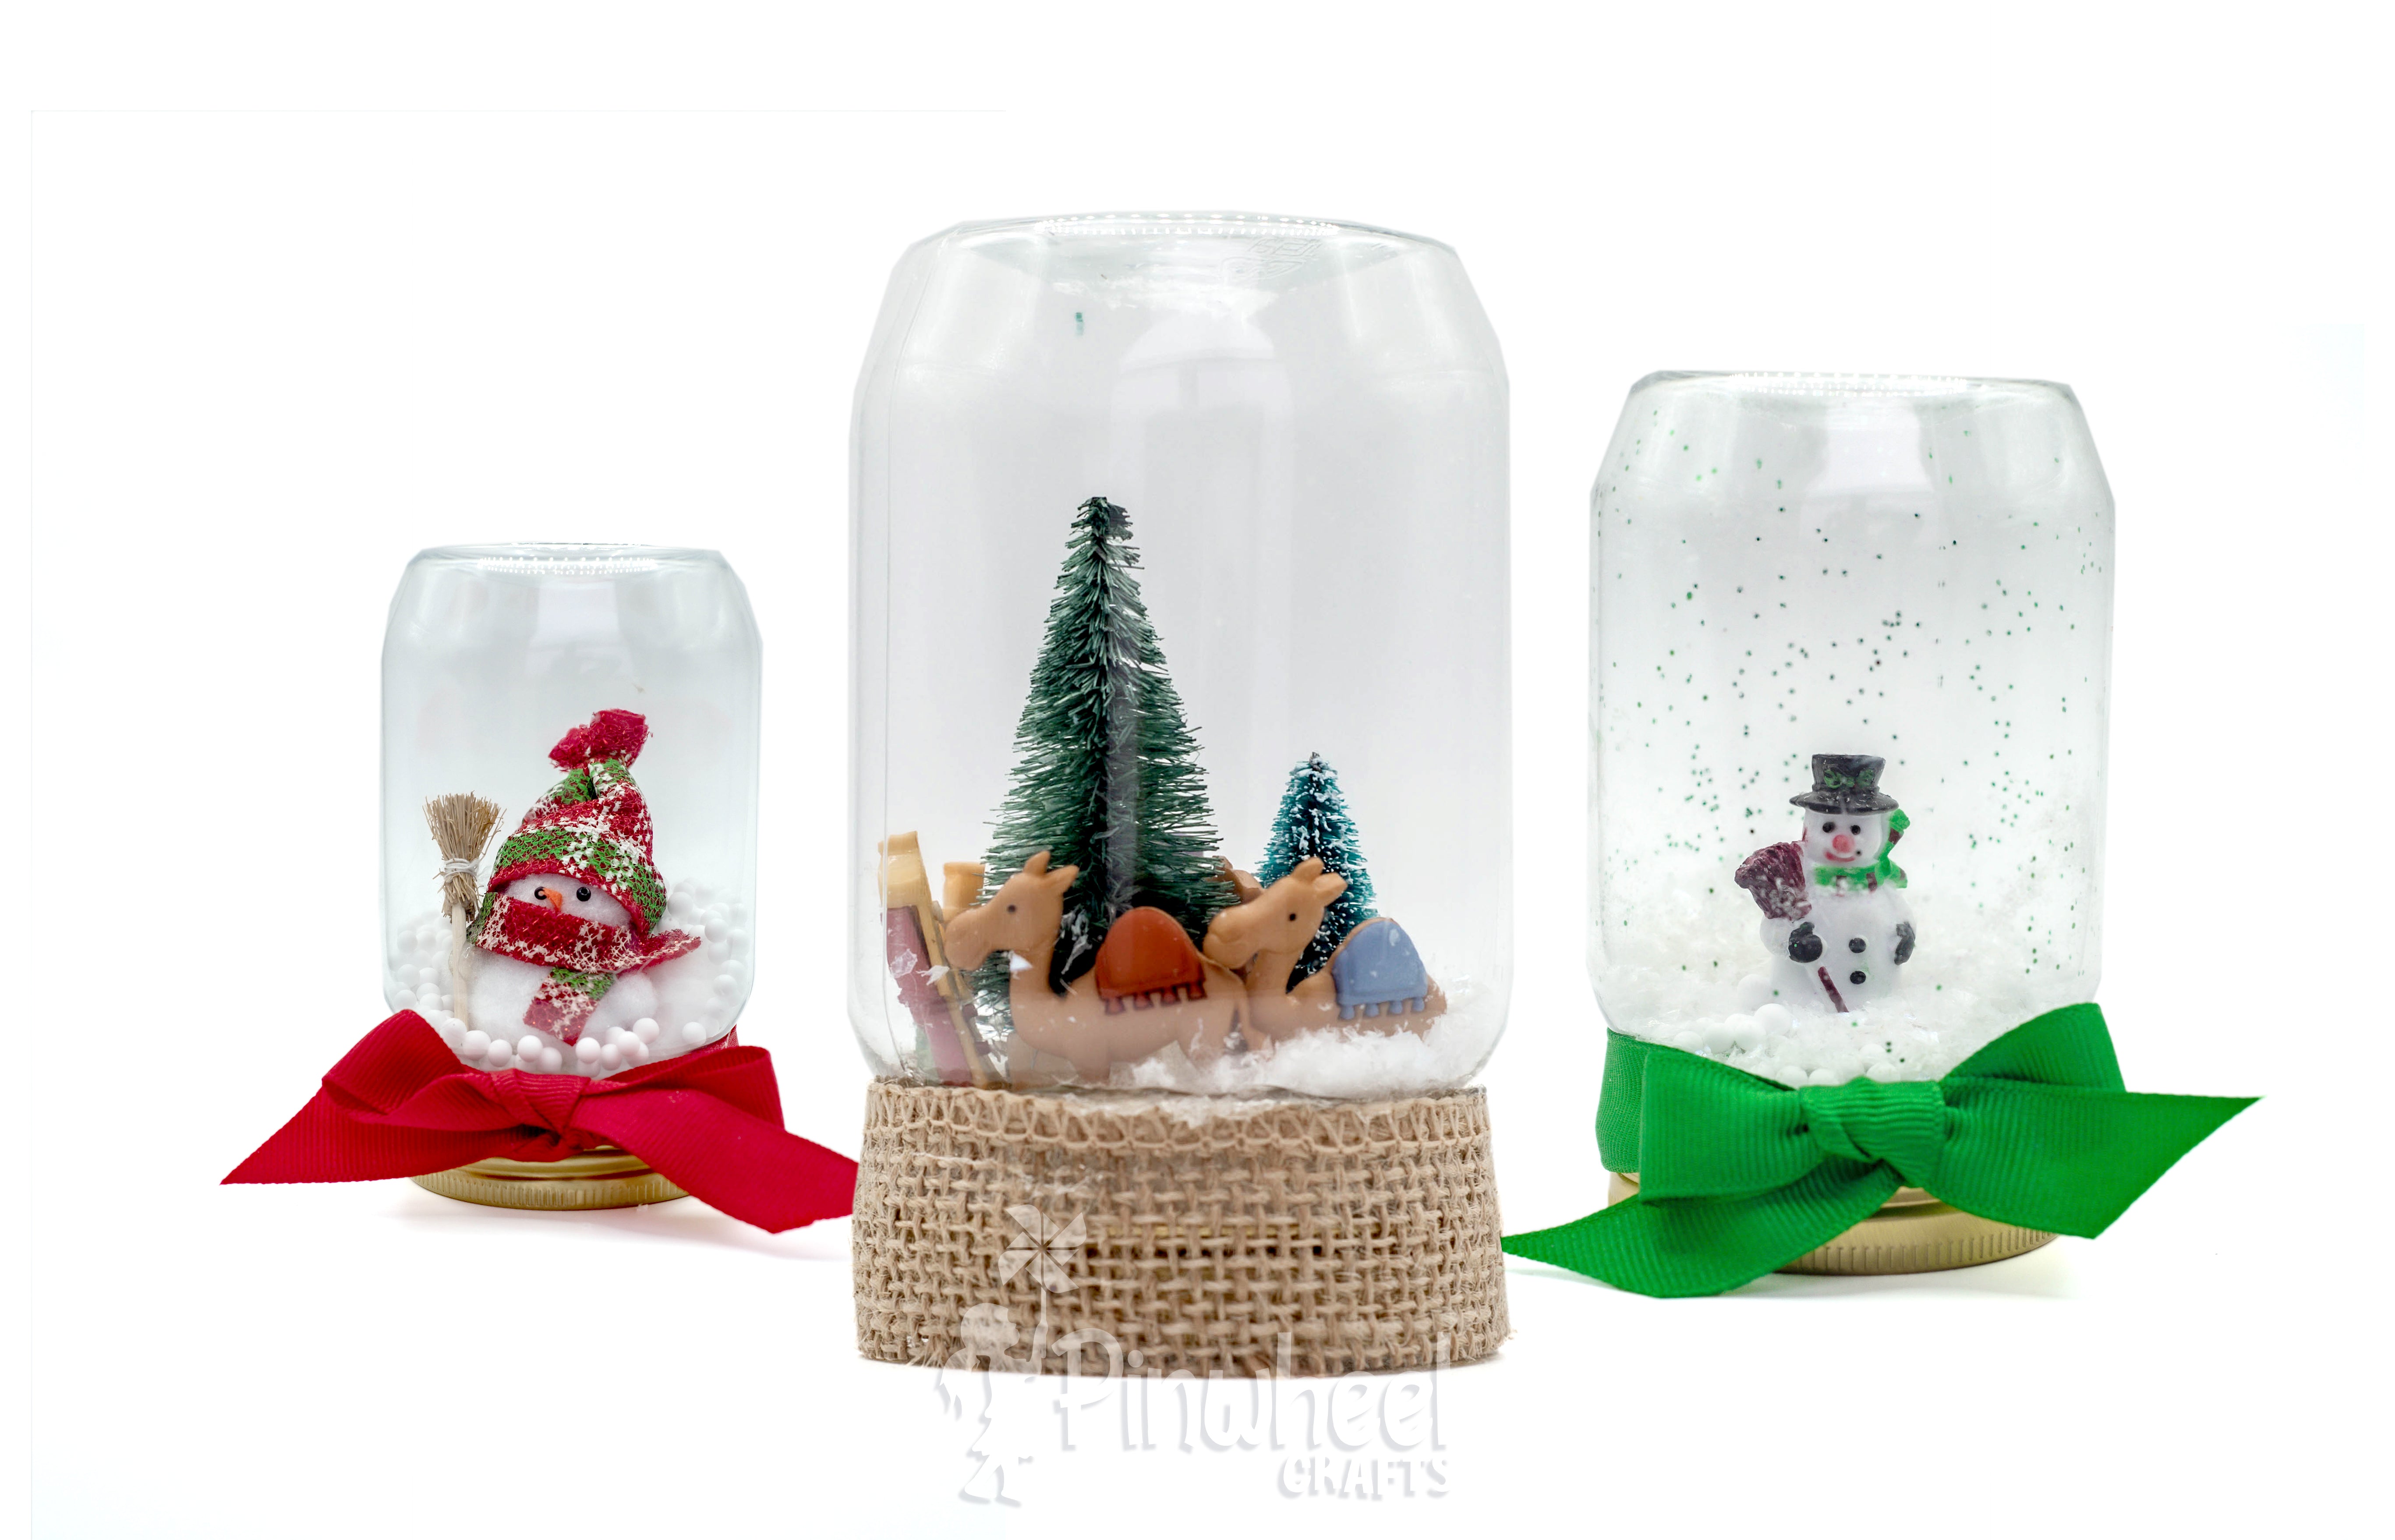 Pinwheel Crafts all-in-one diy craft kit mason jar fairy lanterns diy crafts to make waterless snow globe, ornaments, and fairy night lights